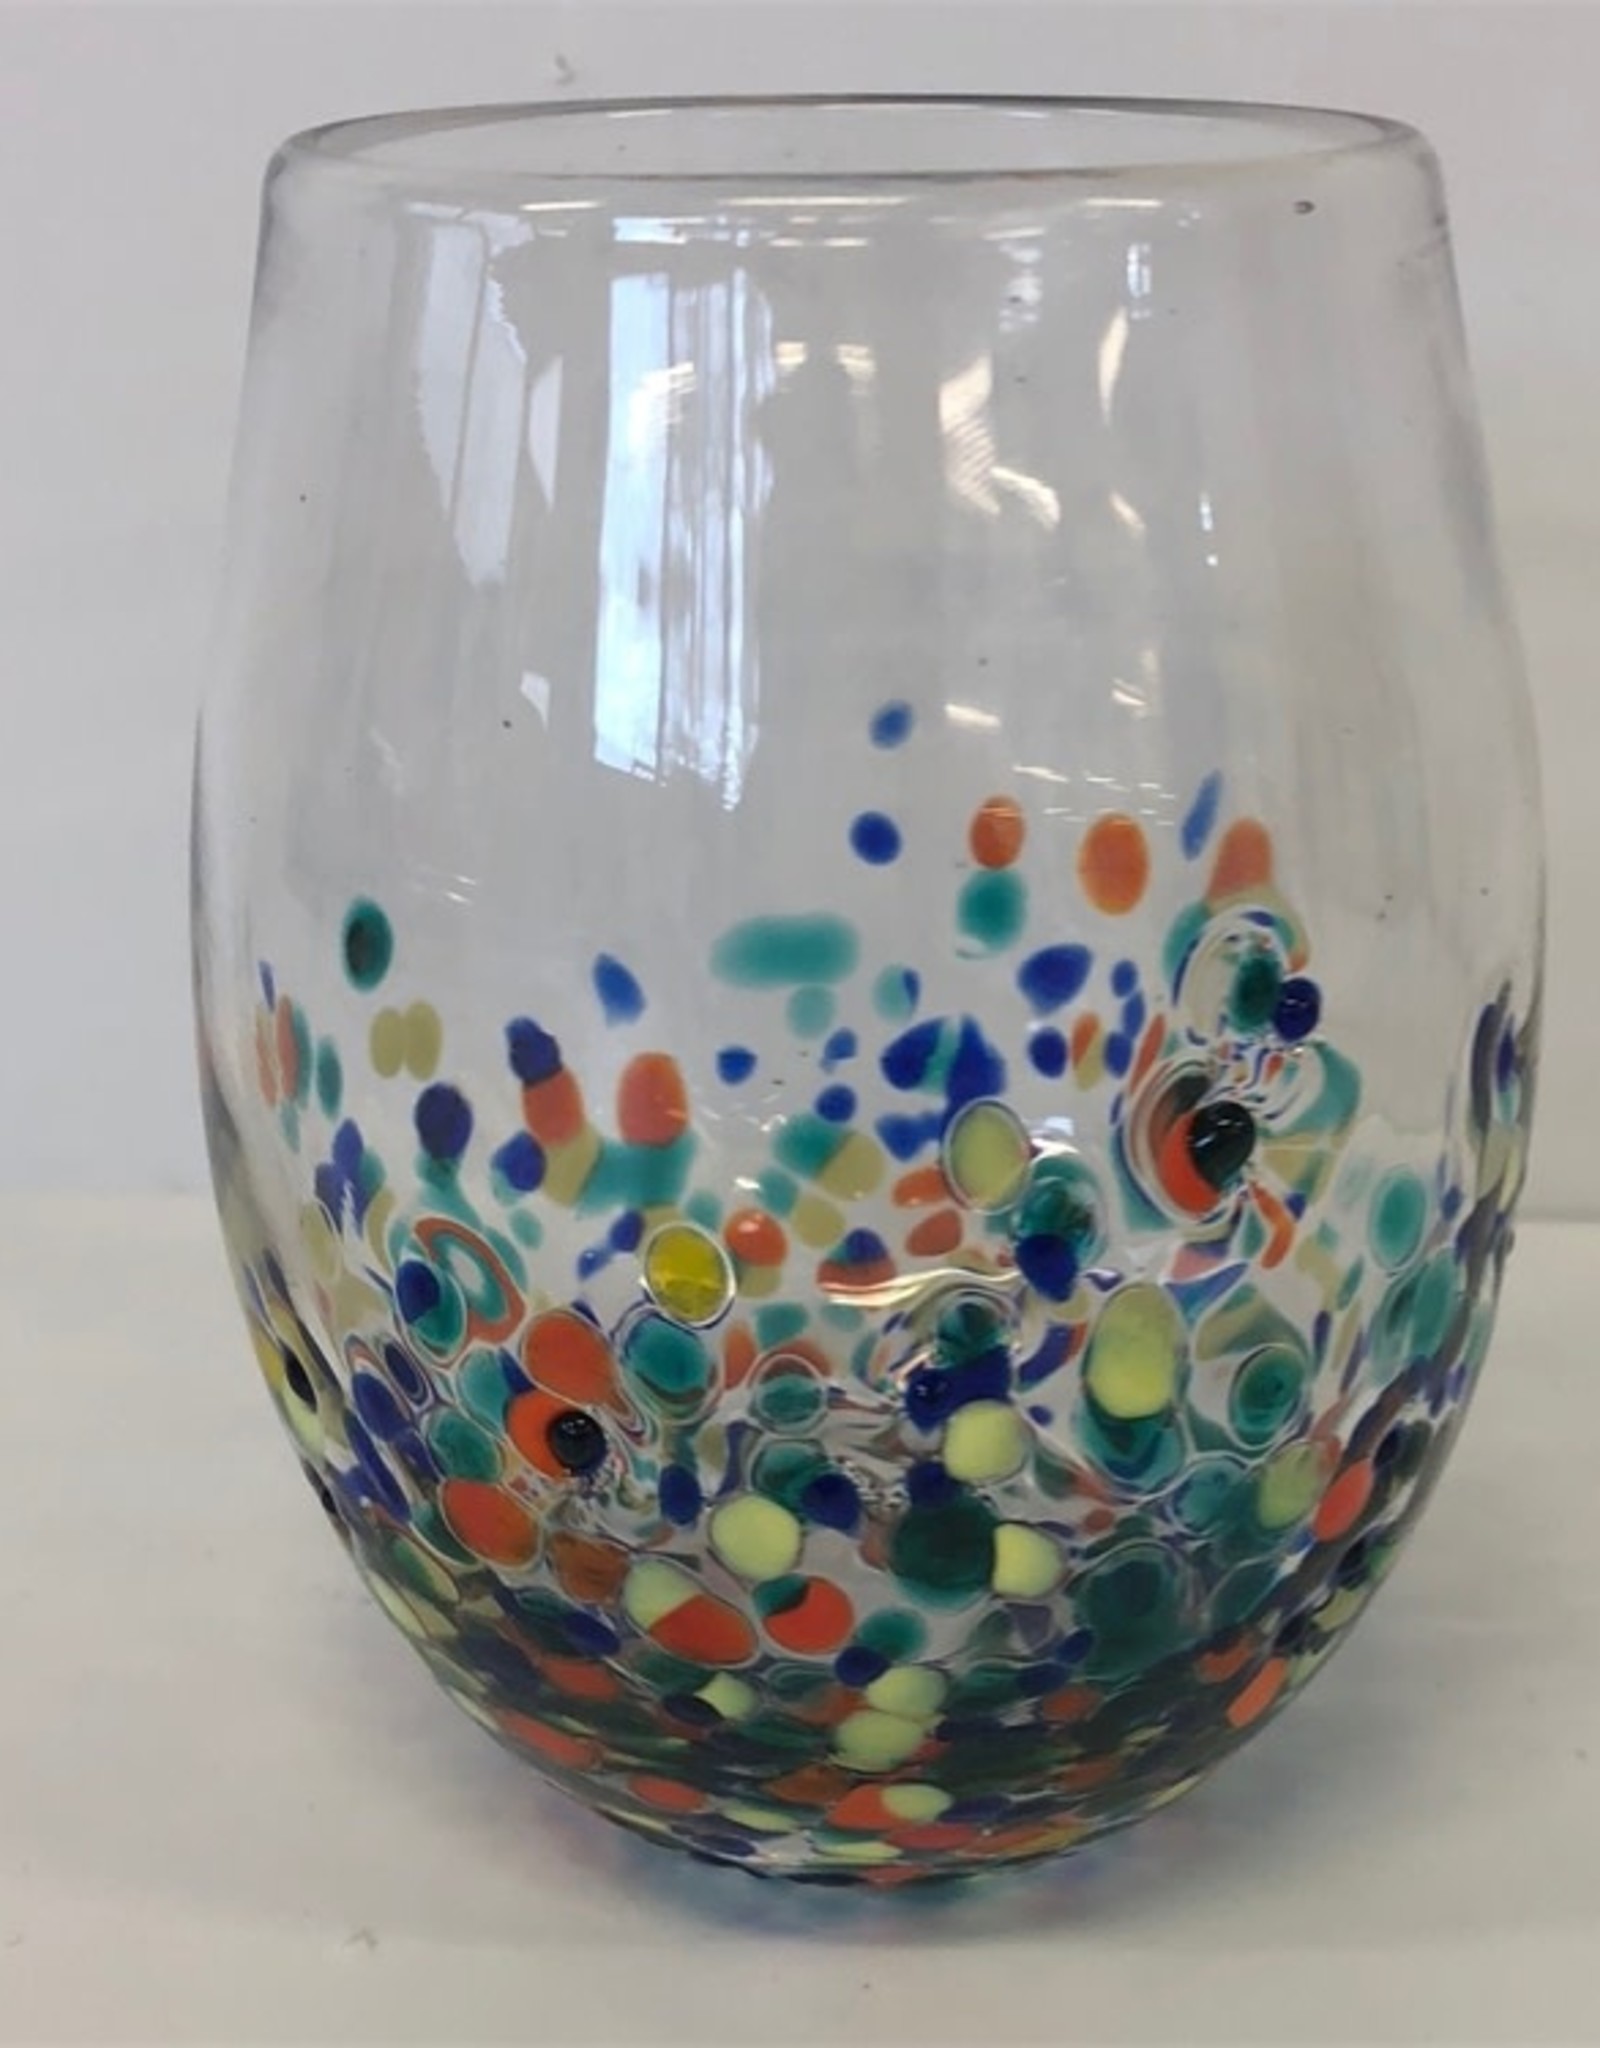 Pebble Glassware - Stemless Wine Glass with Confetti